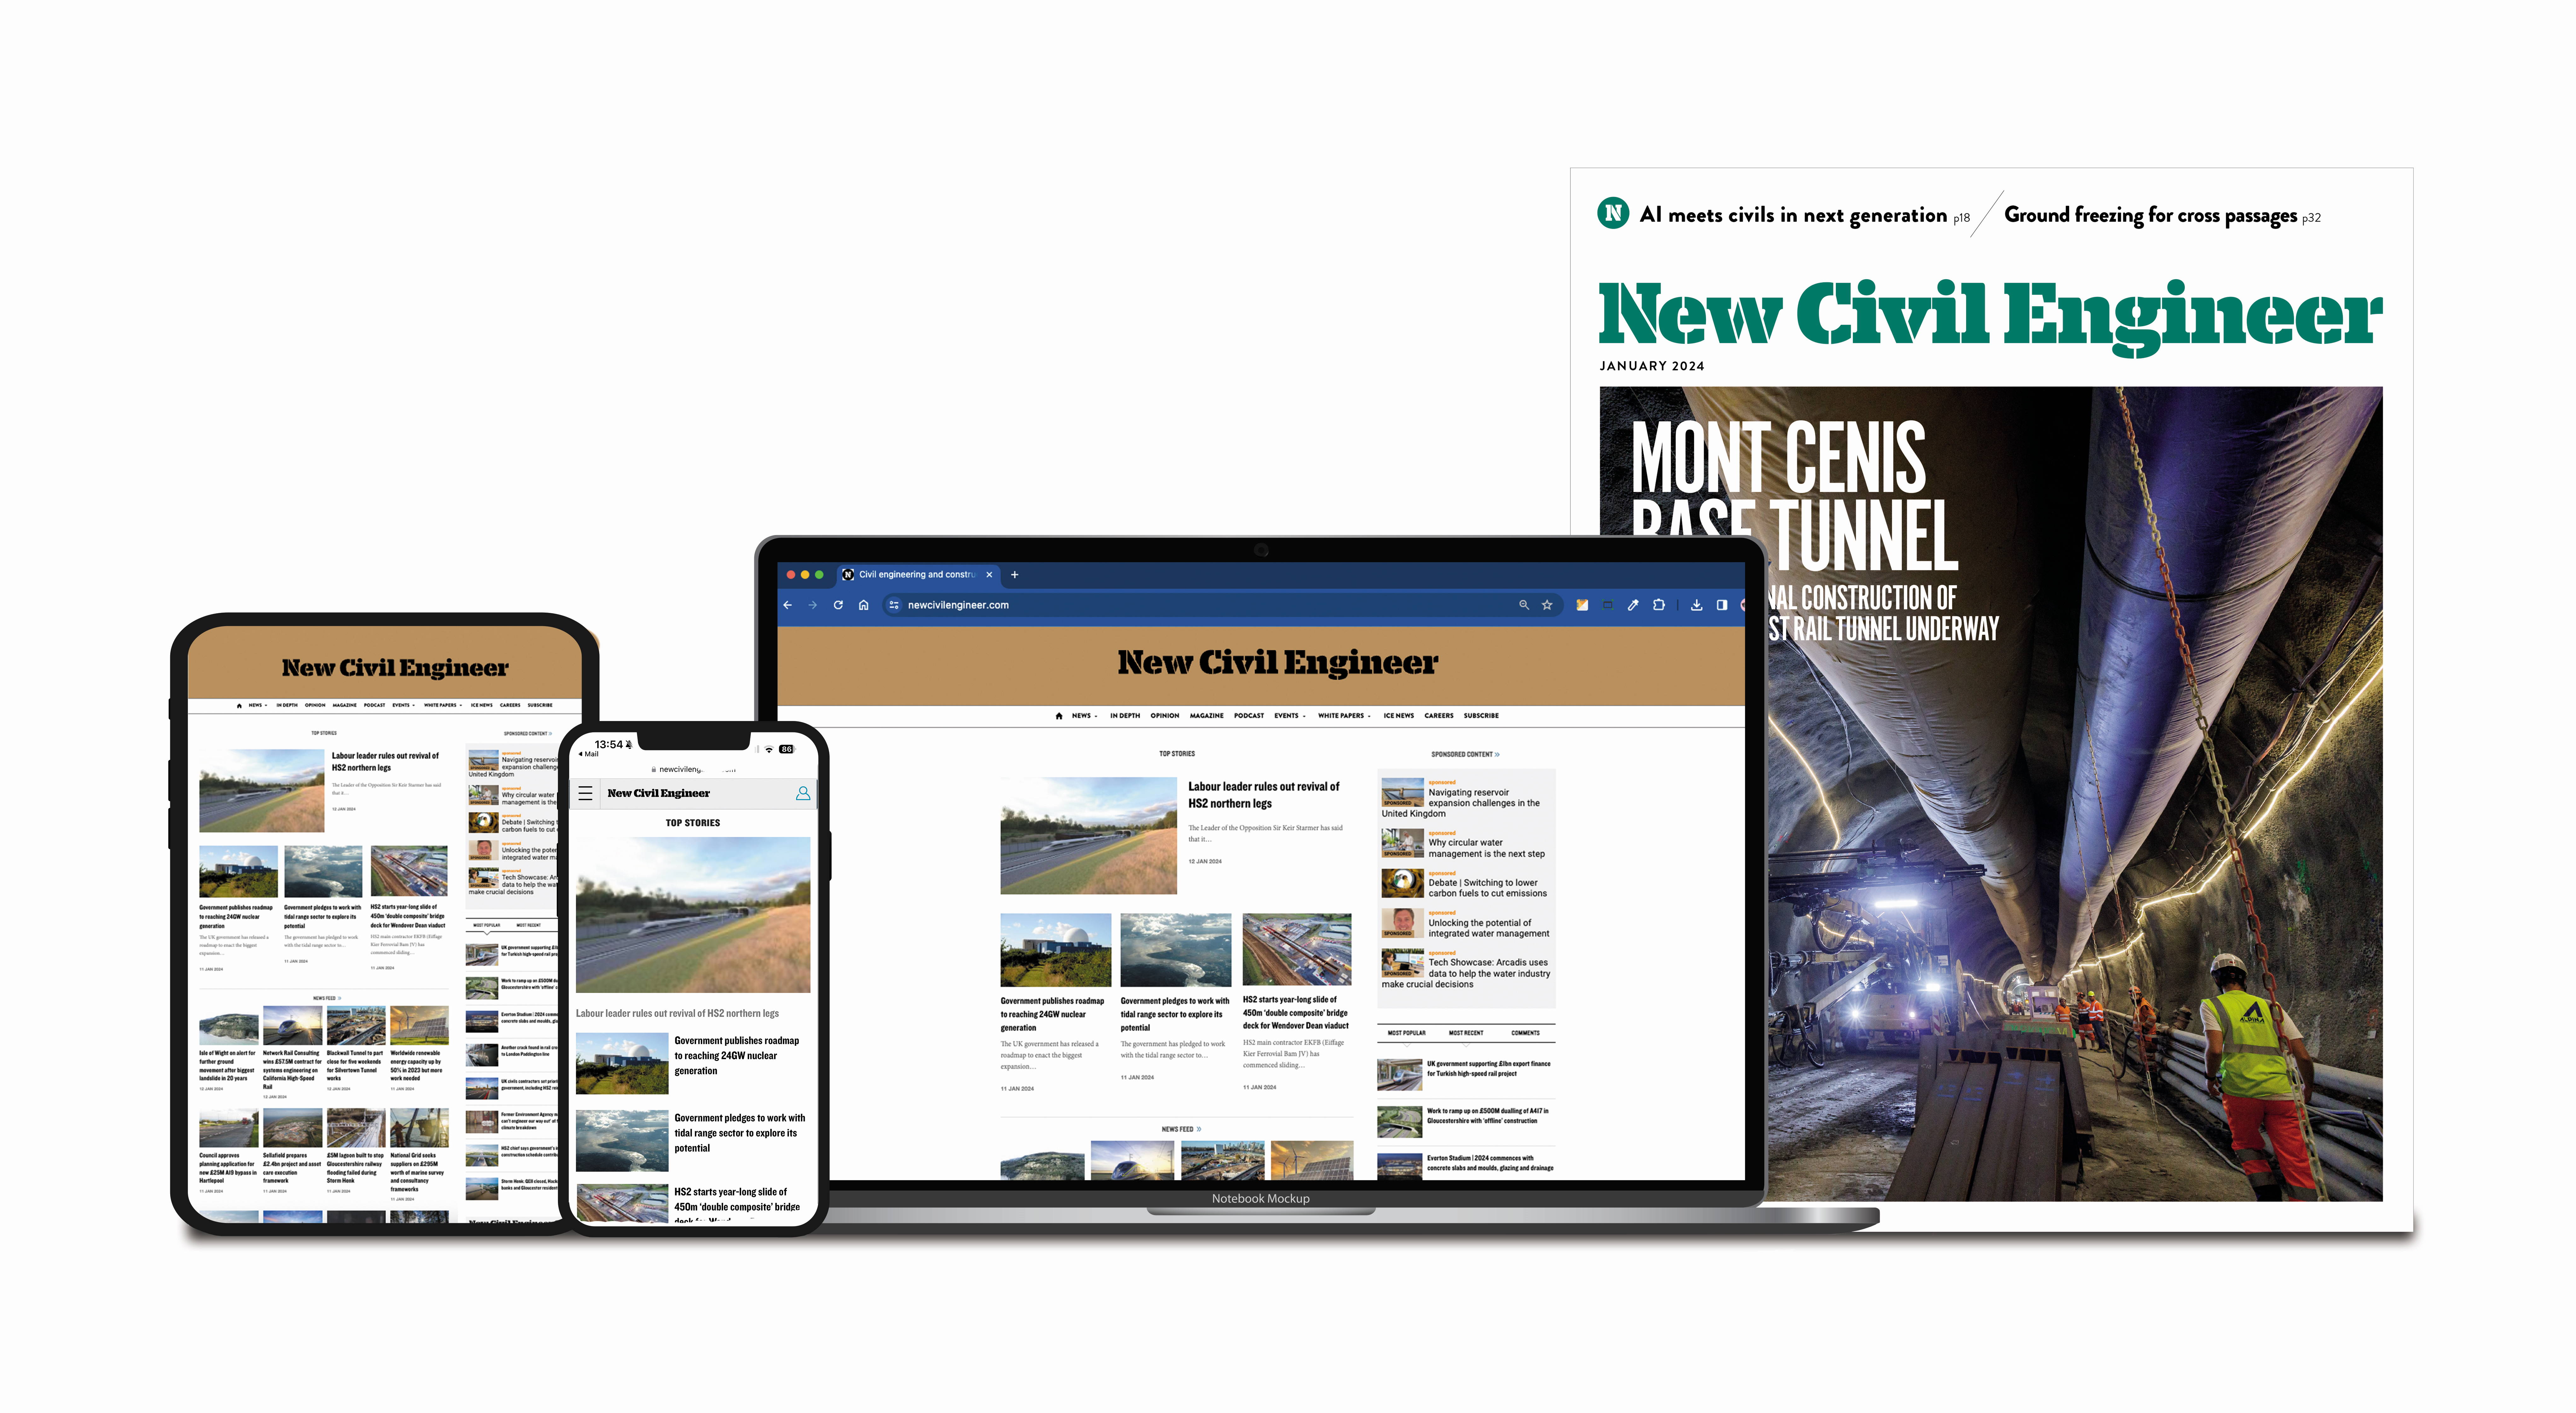 Full range of New Civil Engineer magazine products